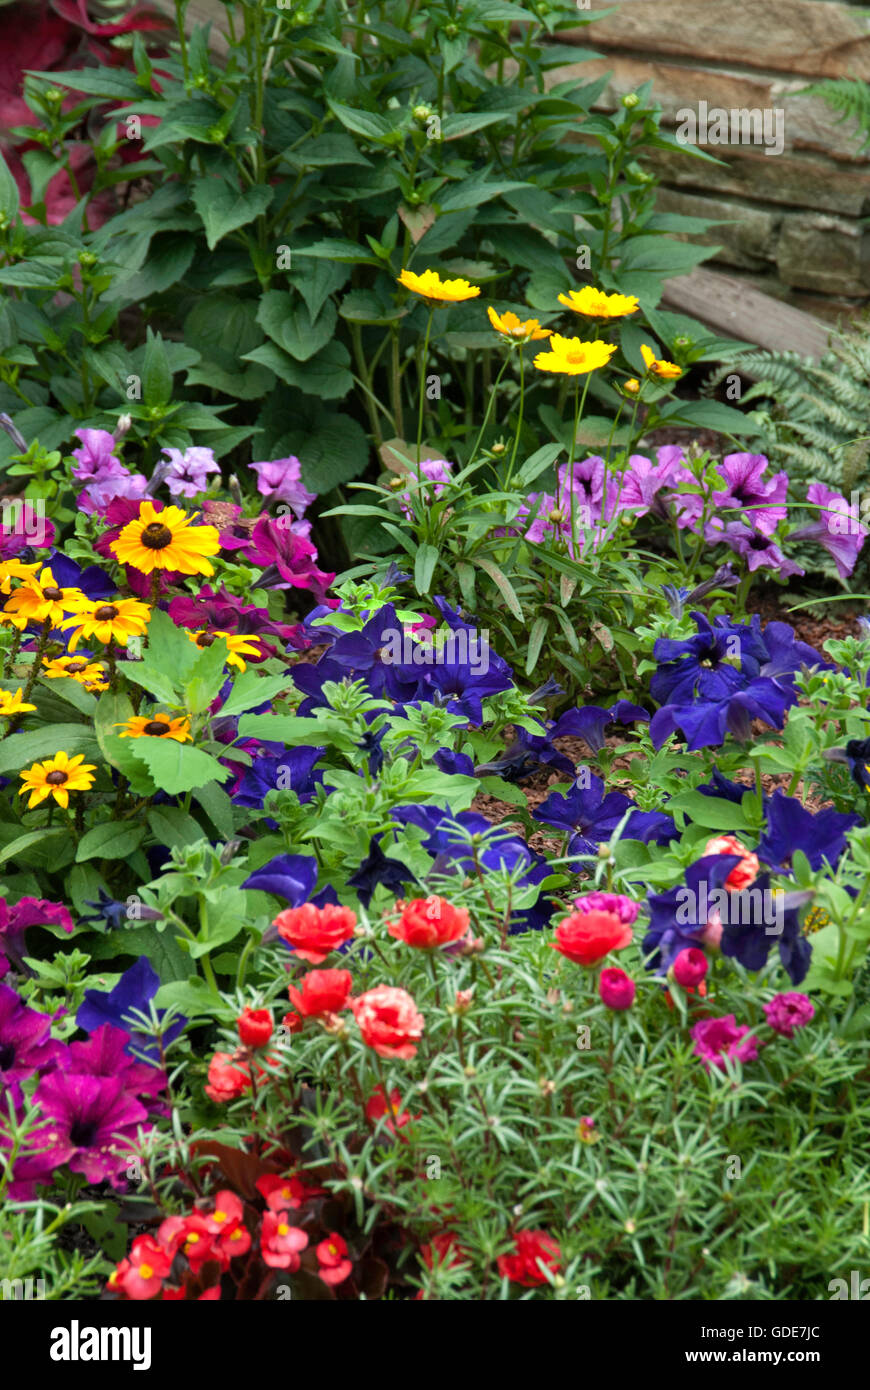 Annual colorful garden with Portulaca, petunias, coreopsis, rudbeckia, Stock Photo